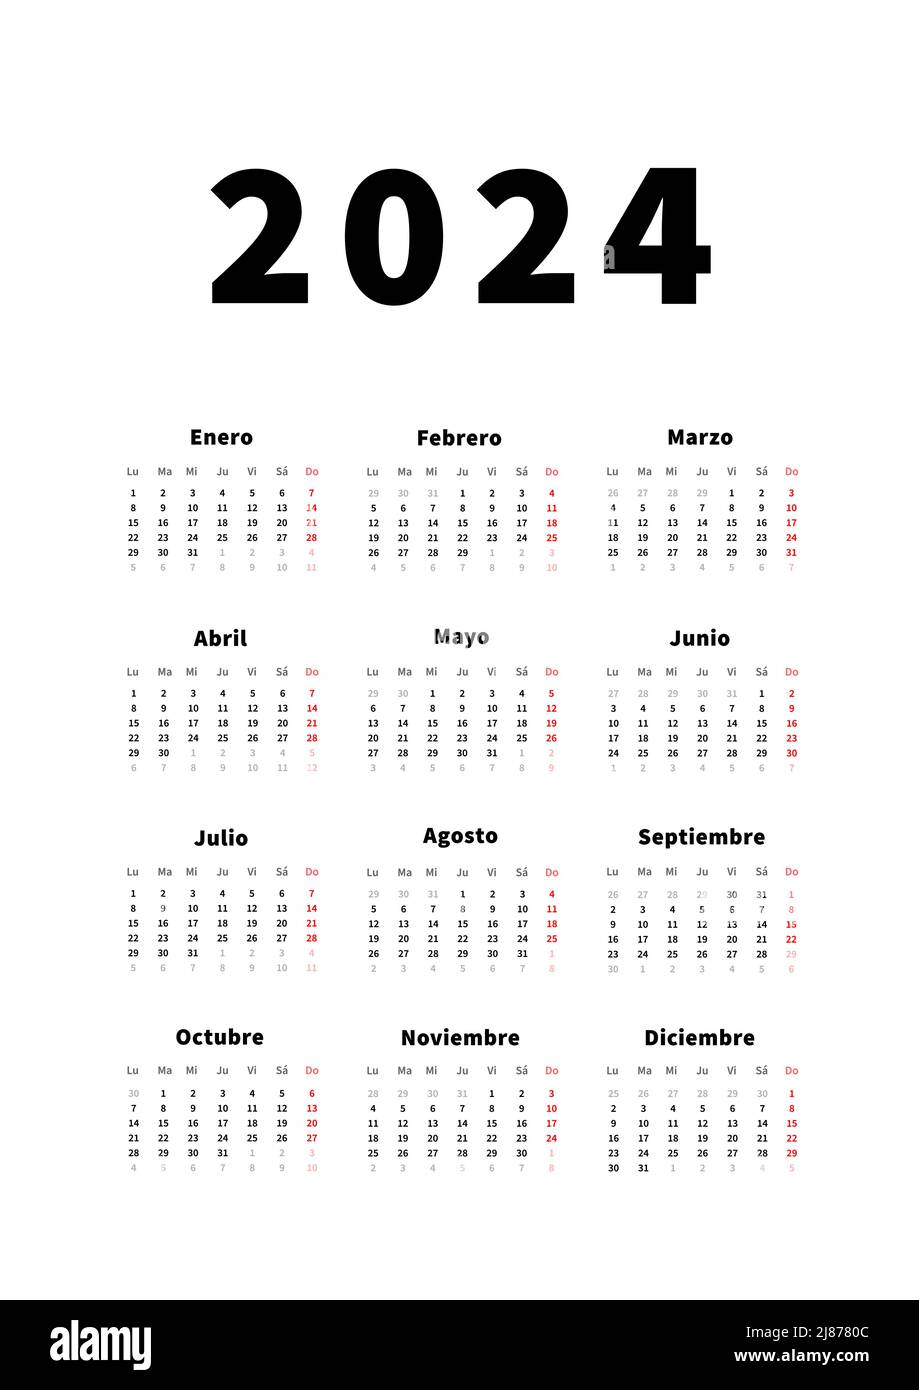 Calendario vertical 2024 - Twinkl